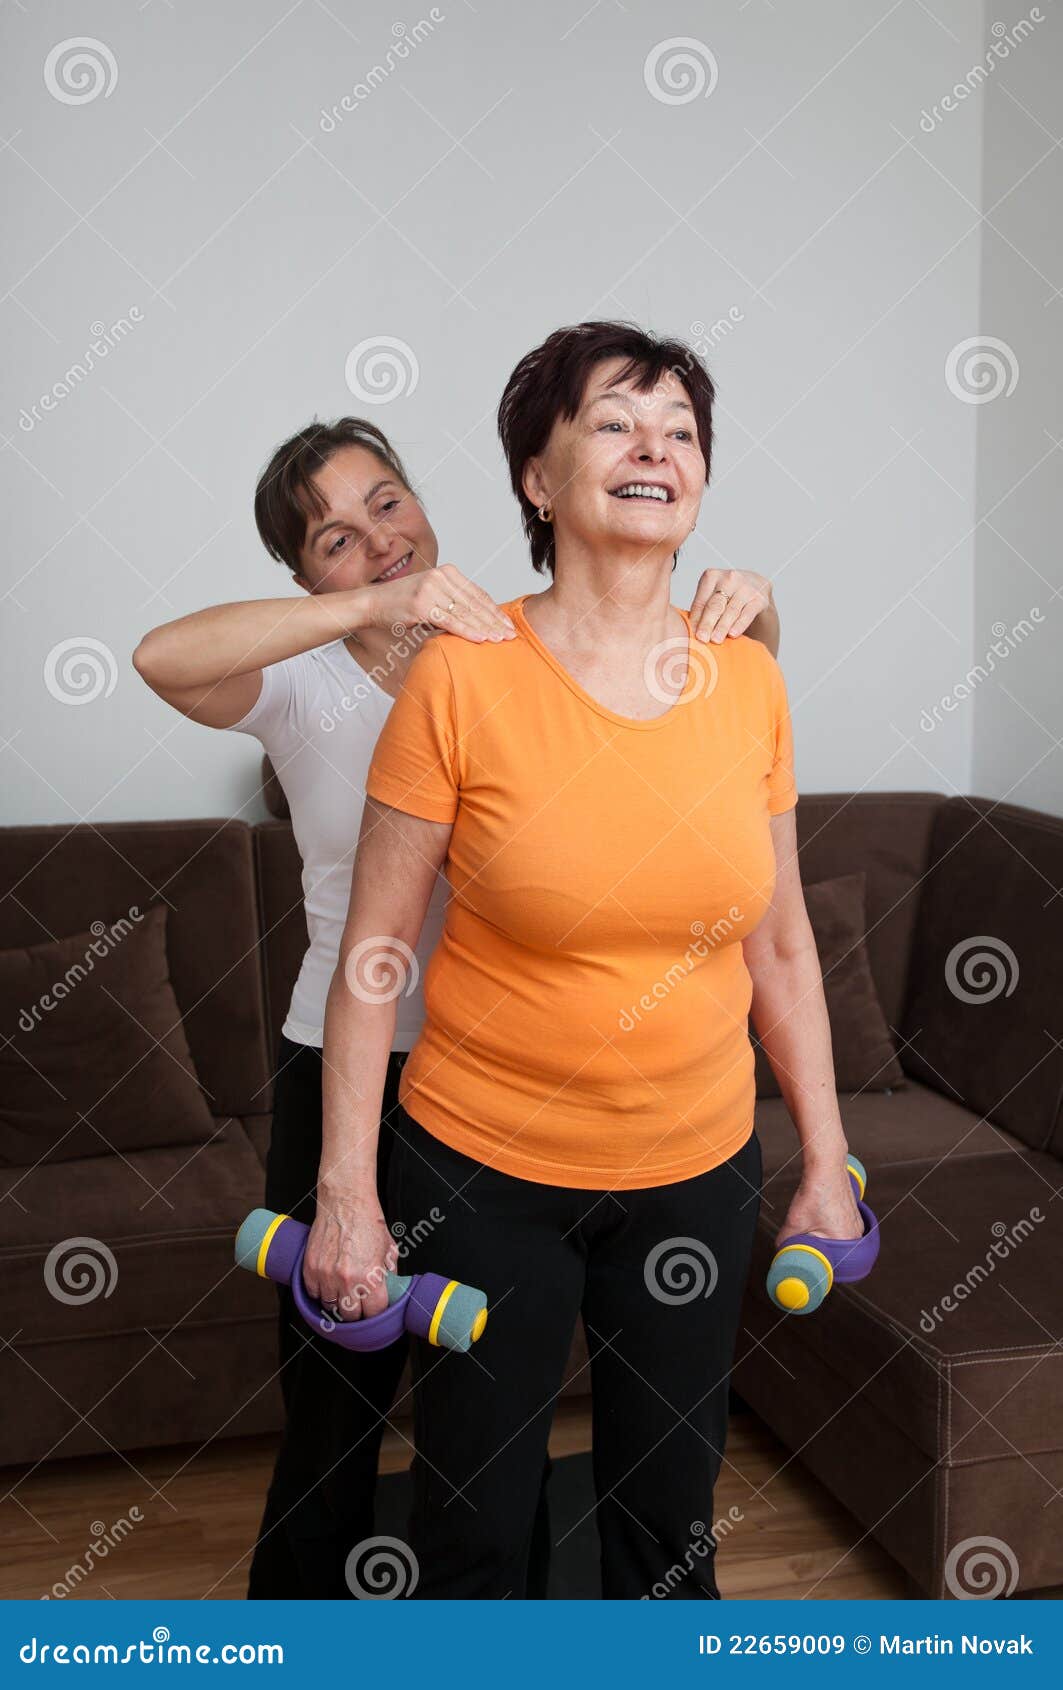 Giving Massage Senior Fitness Woman Stock Image Image Of Massaging